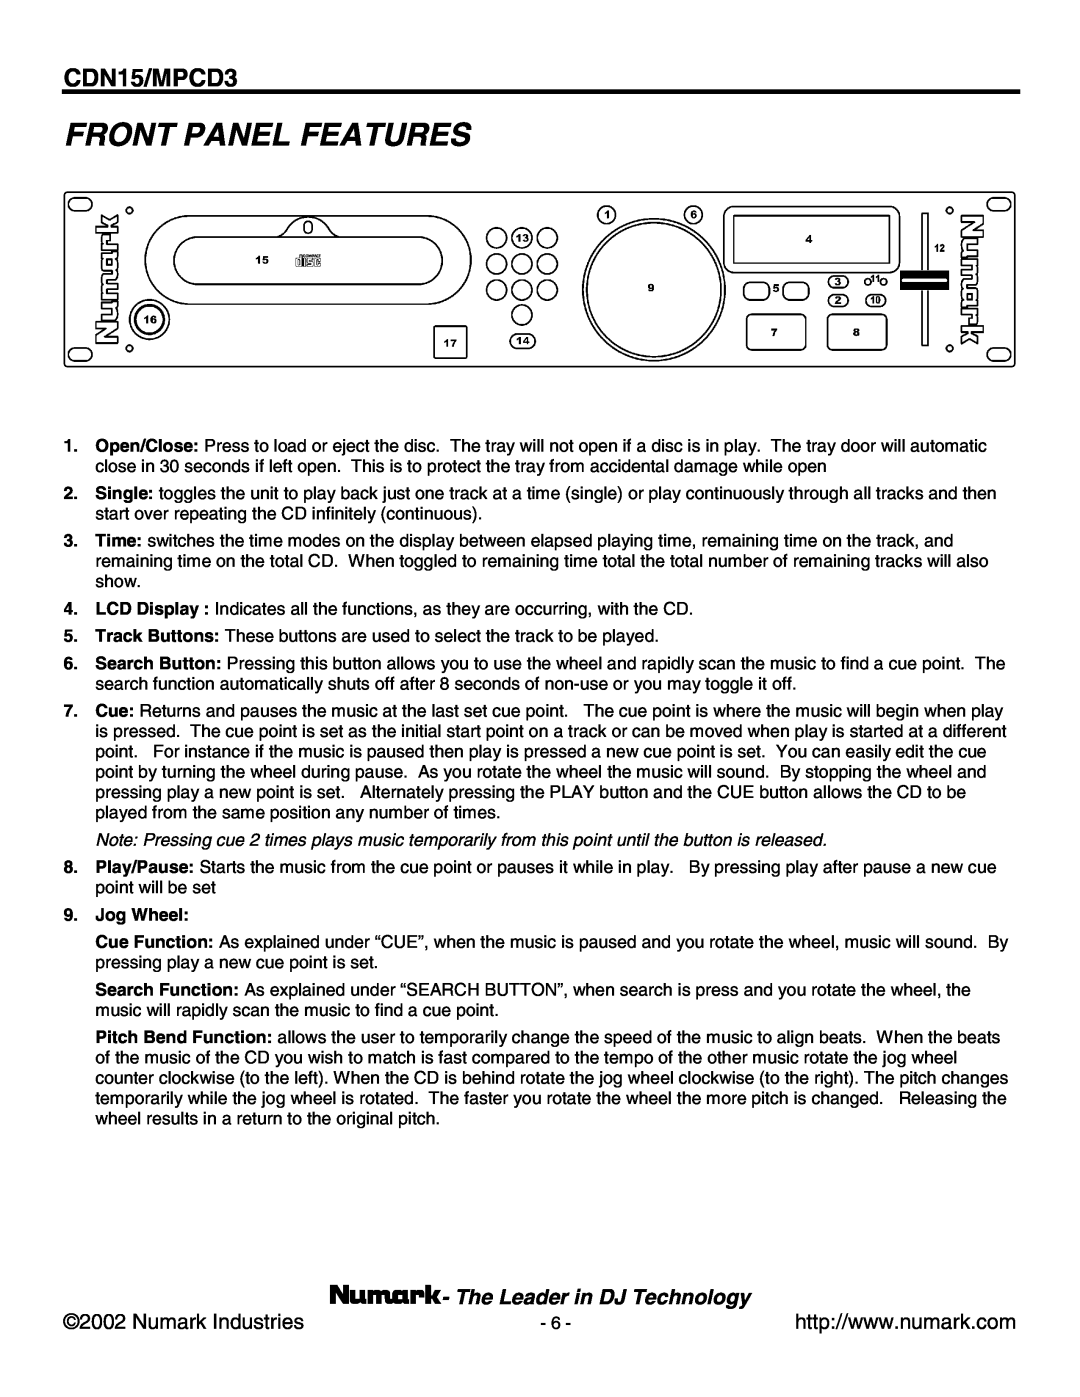 Numark Industries MPCD3, CDN15 user manual Front Panel Features, The Leader in DJ Technology, Jog Wheel 